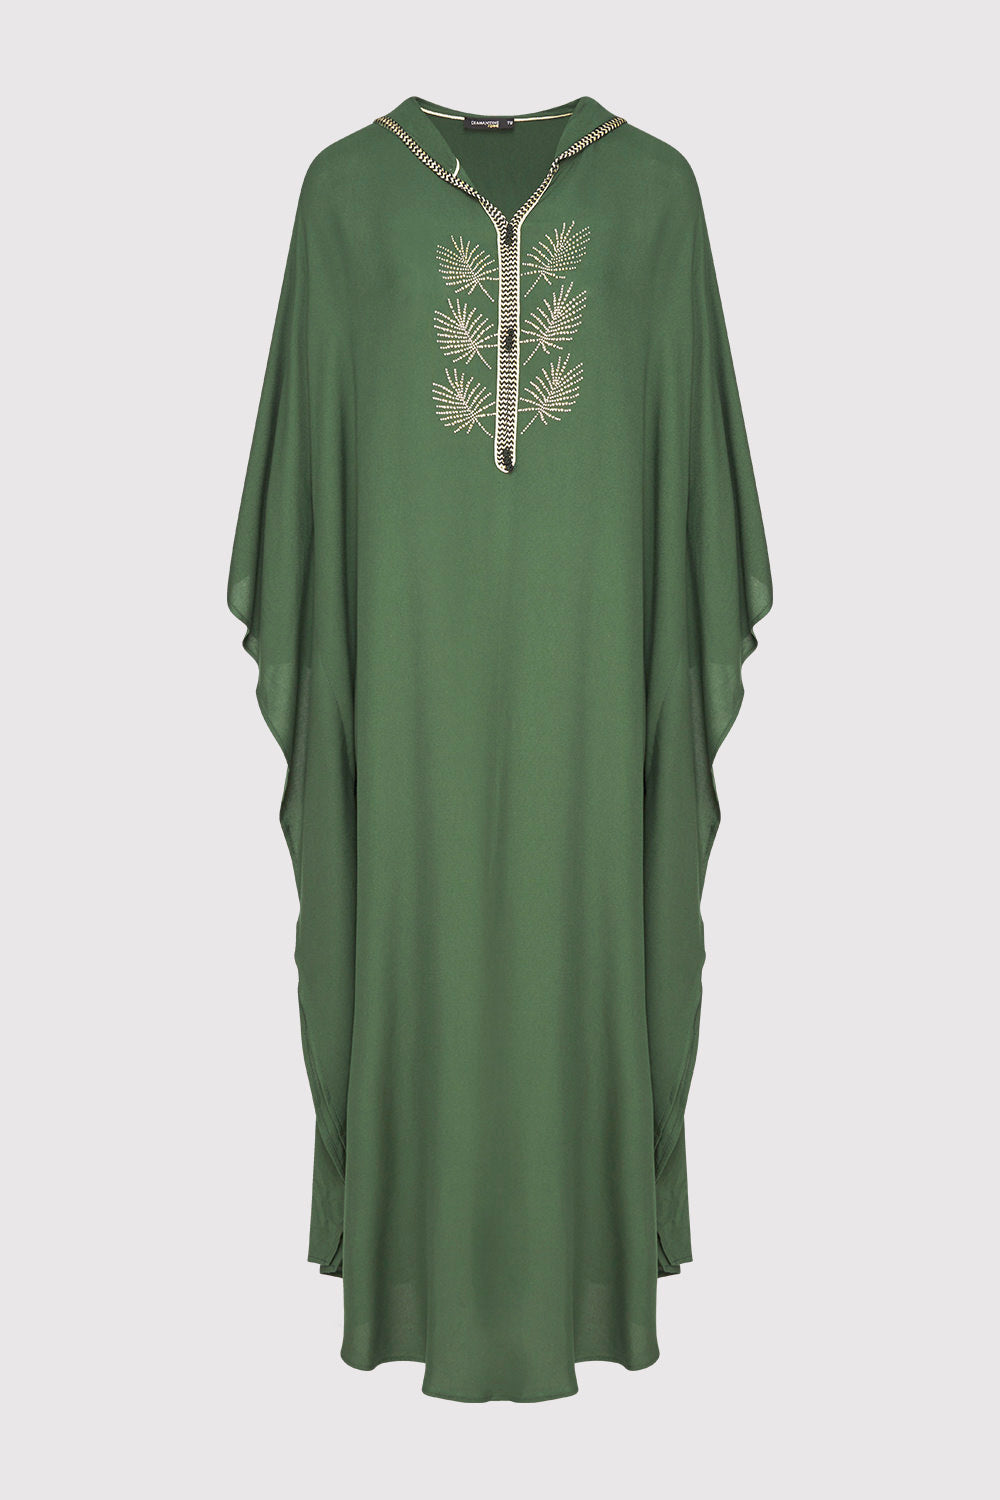 Kaftan Ludmila Cropped Sleeve Hooded Crystal Maxi Dress in Emerald Green